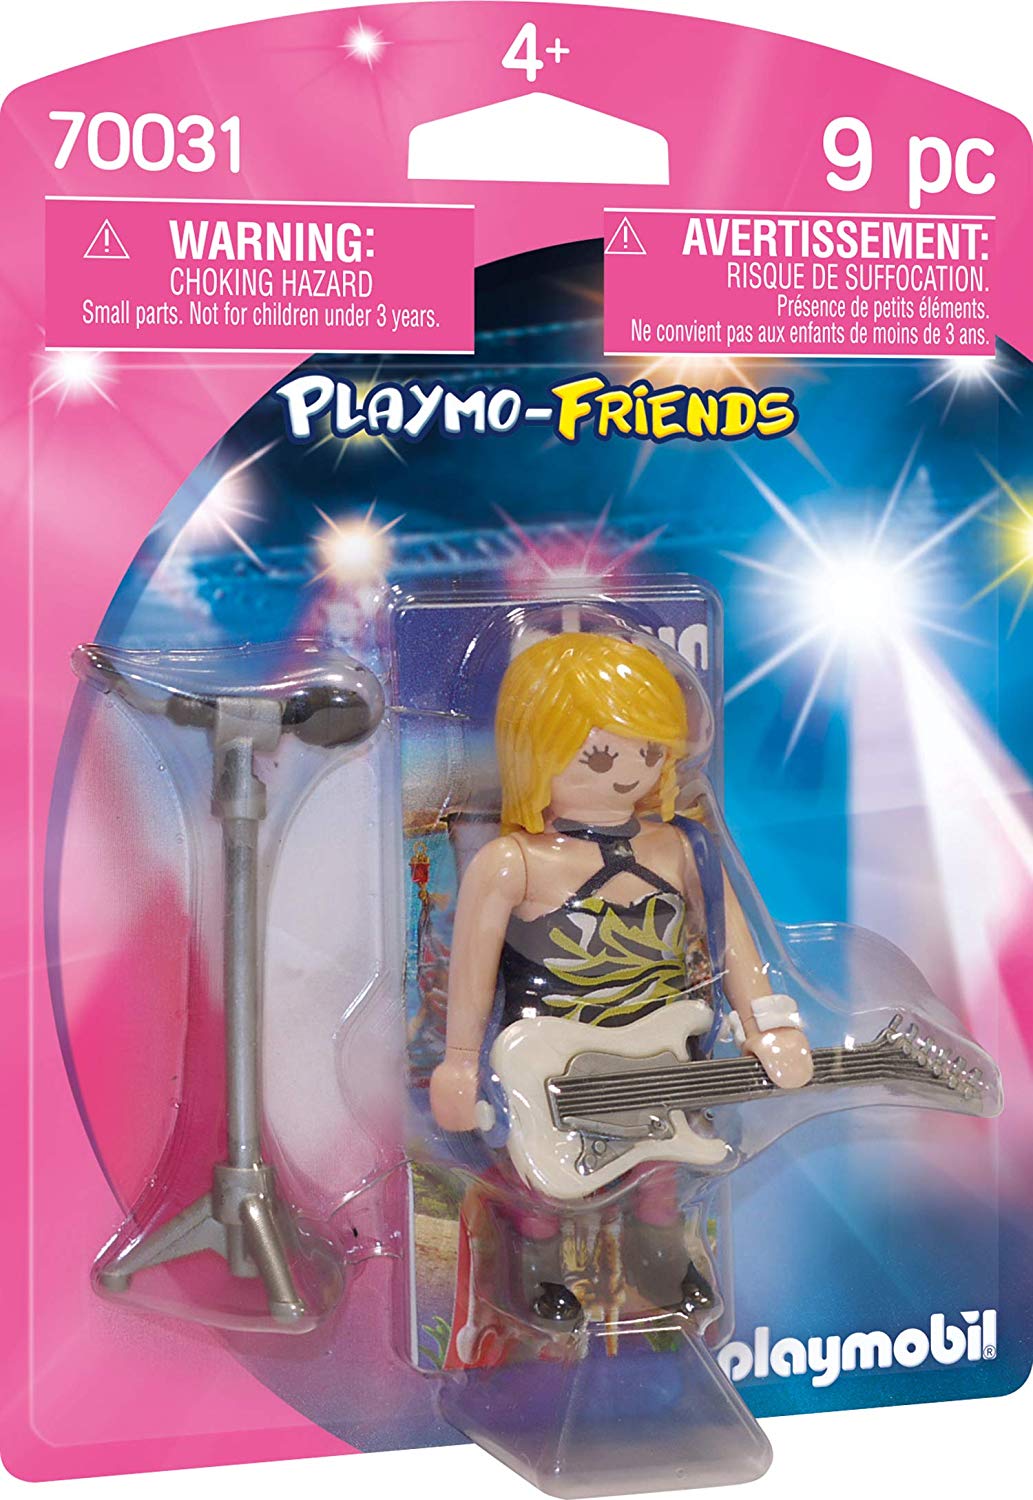 Playmobil 70031 Playmo-Friends Rockstar Multi-Coloured